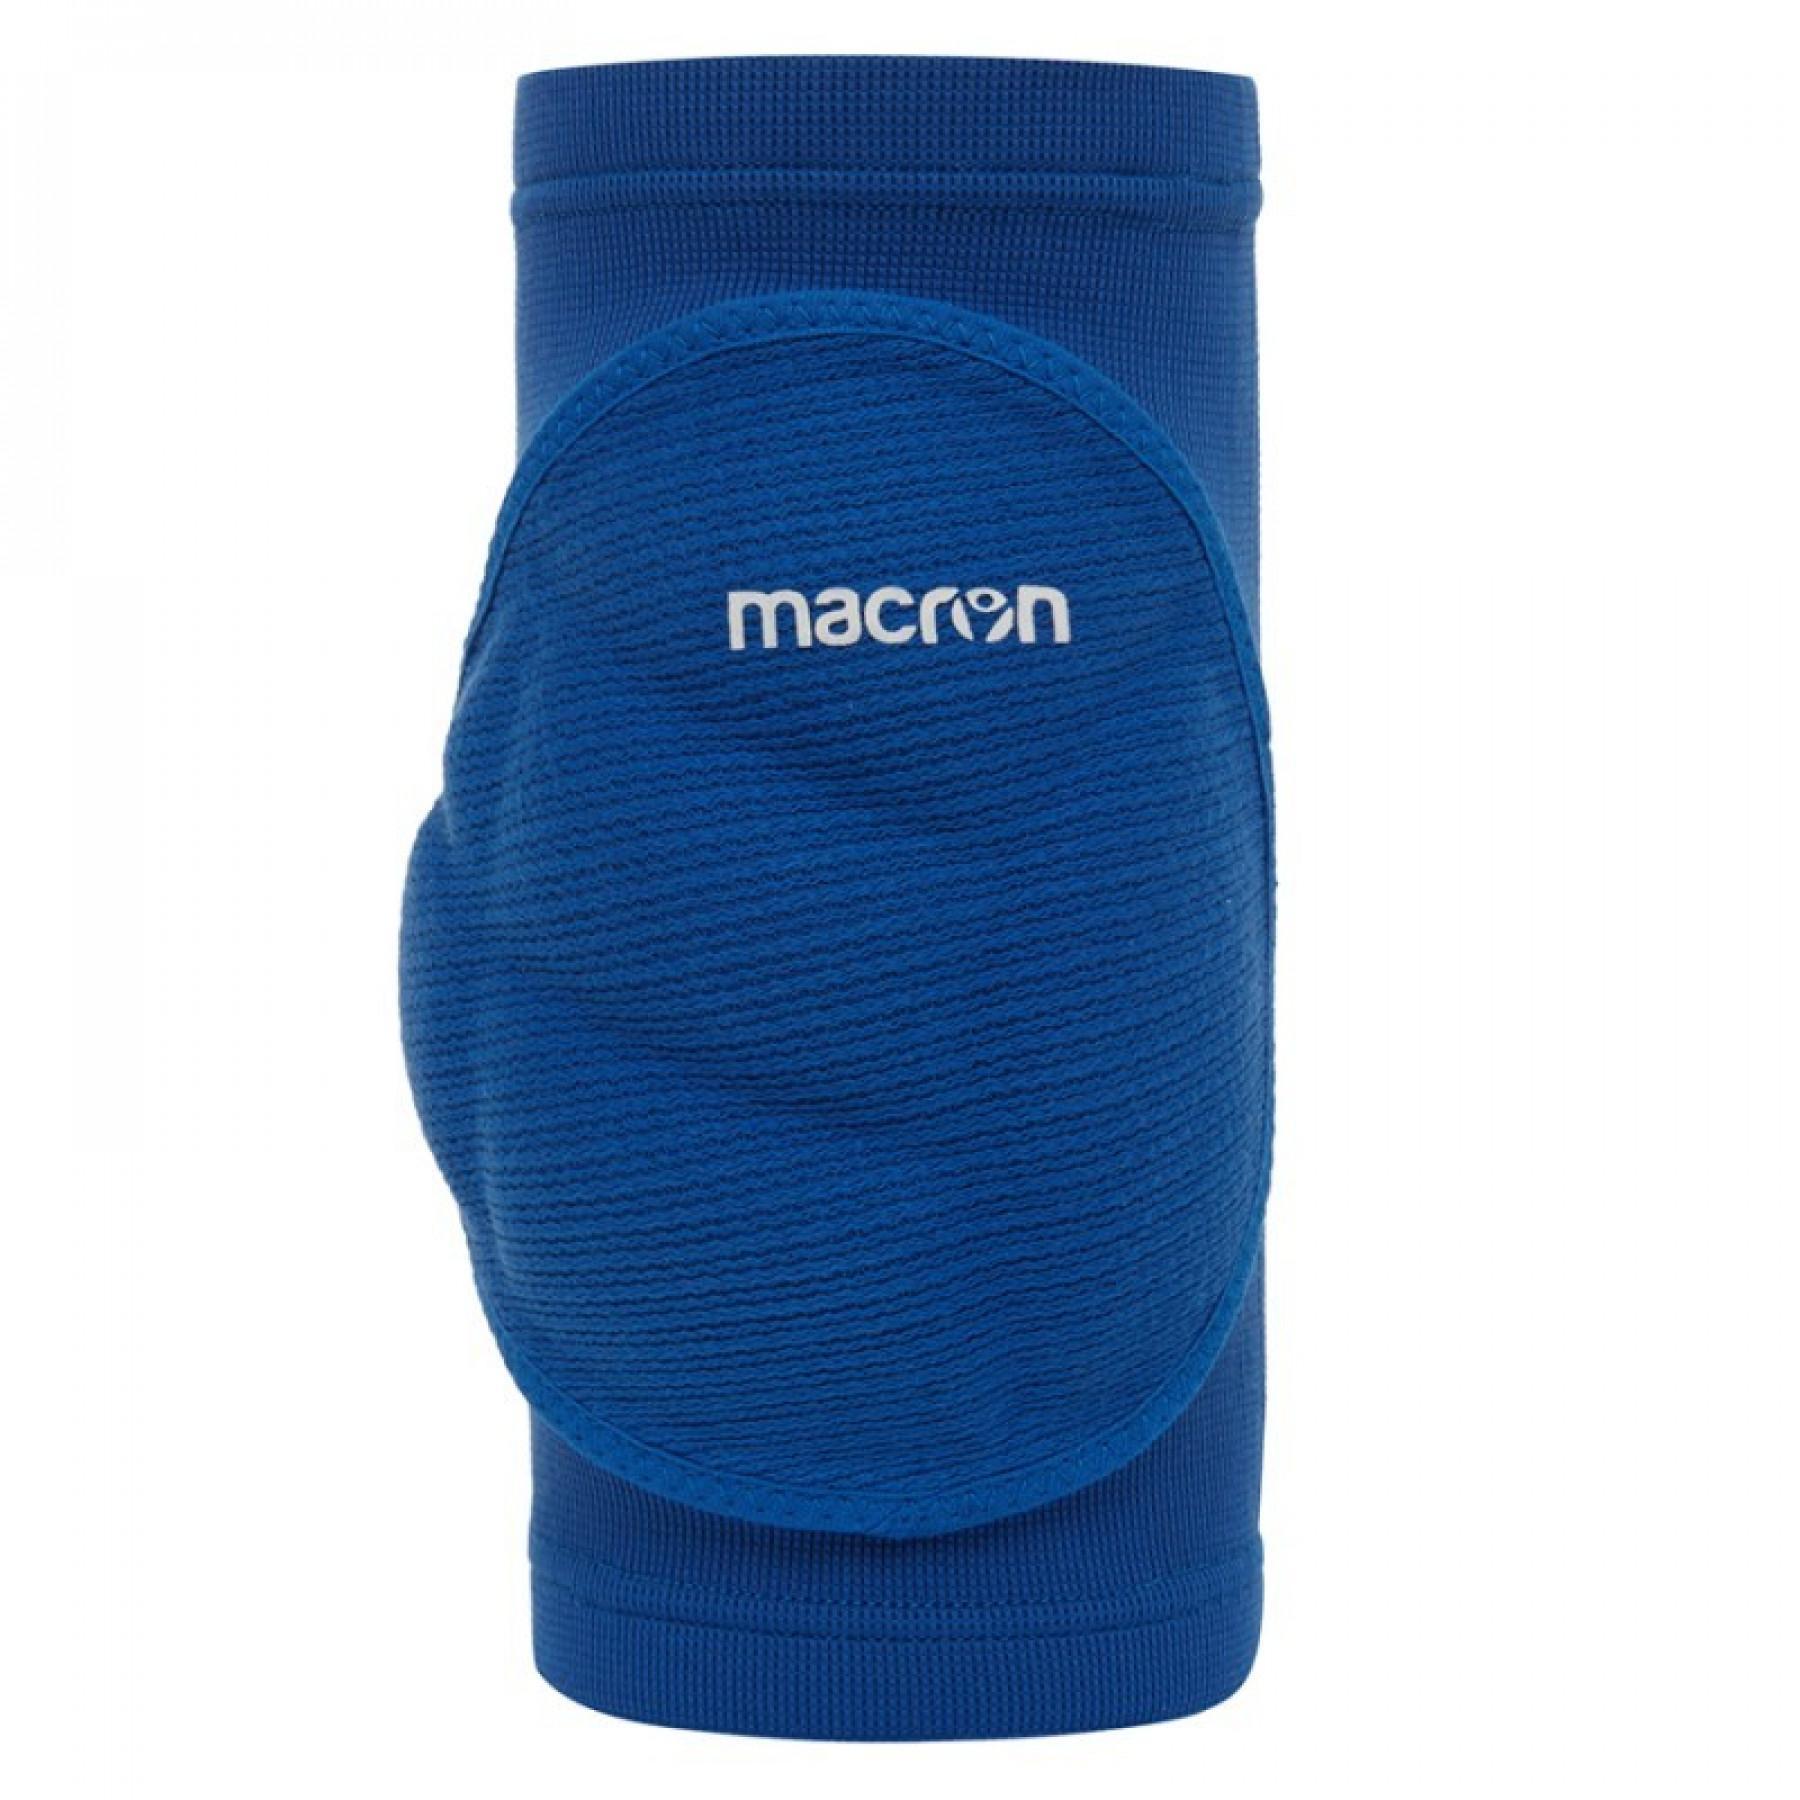 Set of 3 pairs of knee pads Macron Durmast